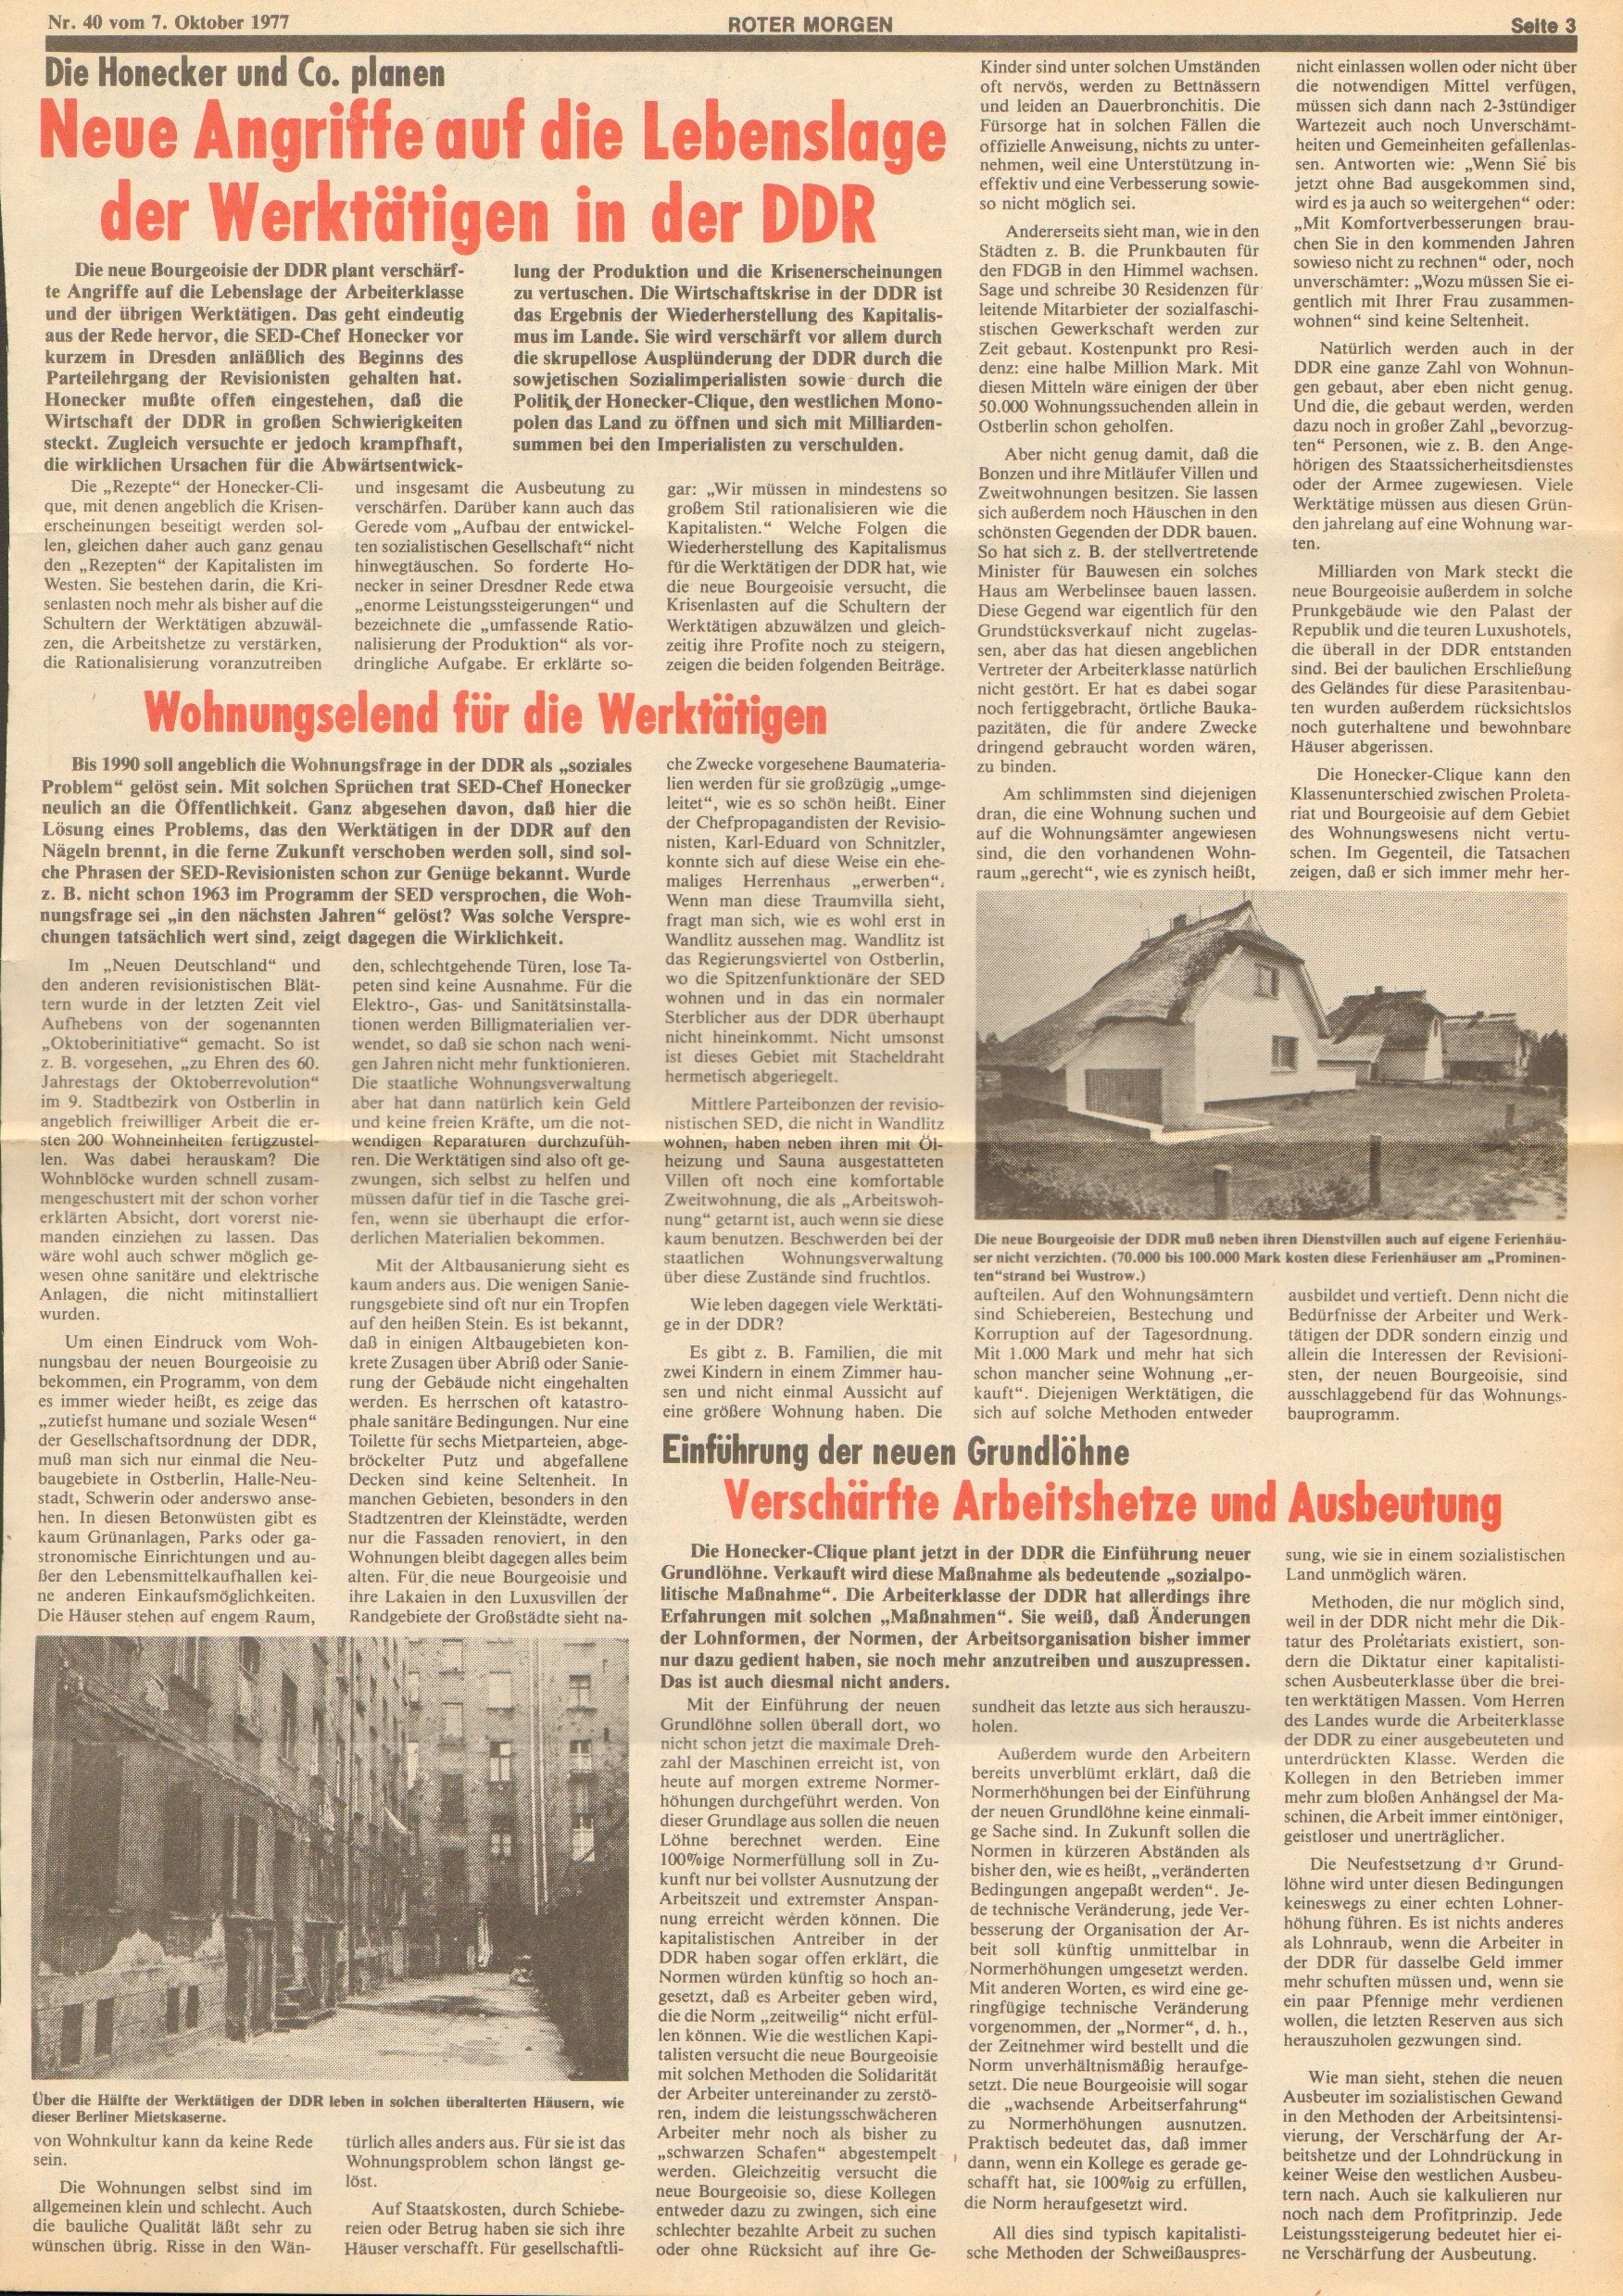 Roter Morgen, 11. Jg., 7. Oktober 1977, Nr. 40, Seite 3